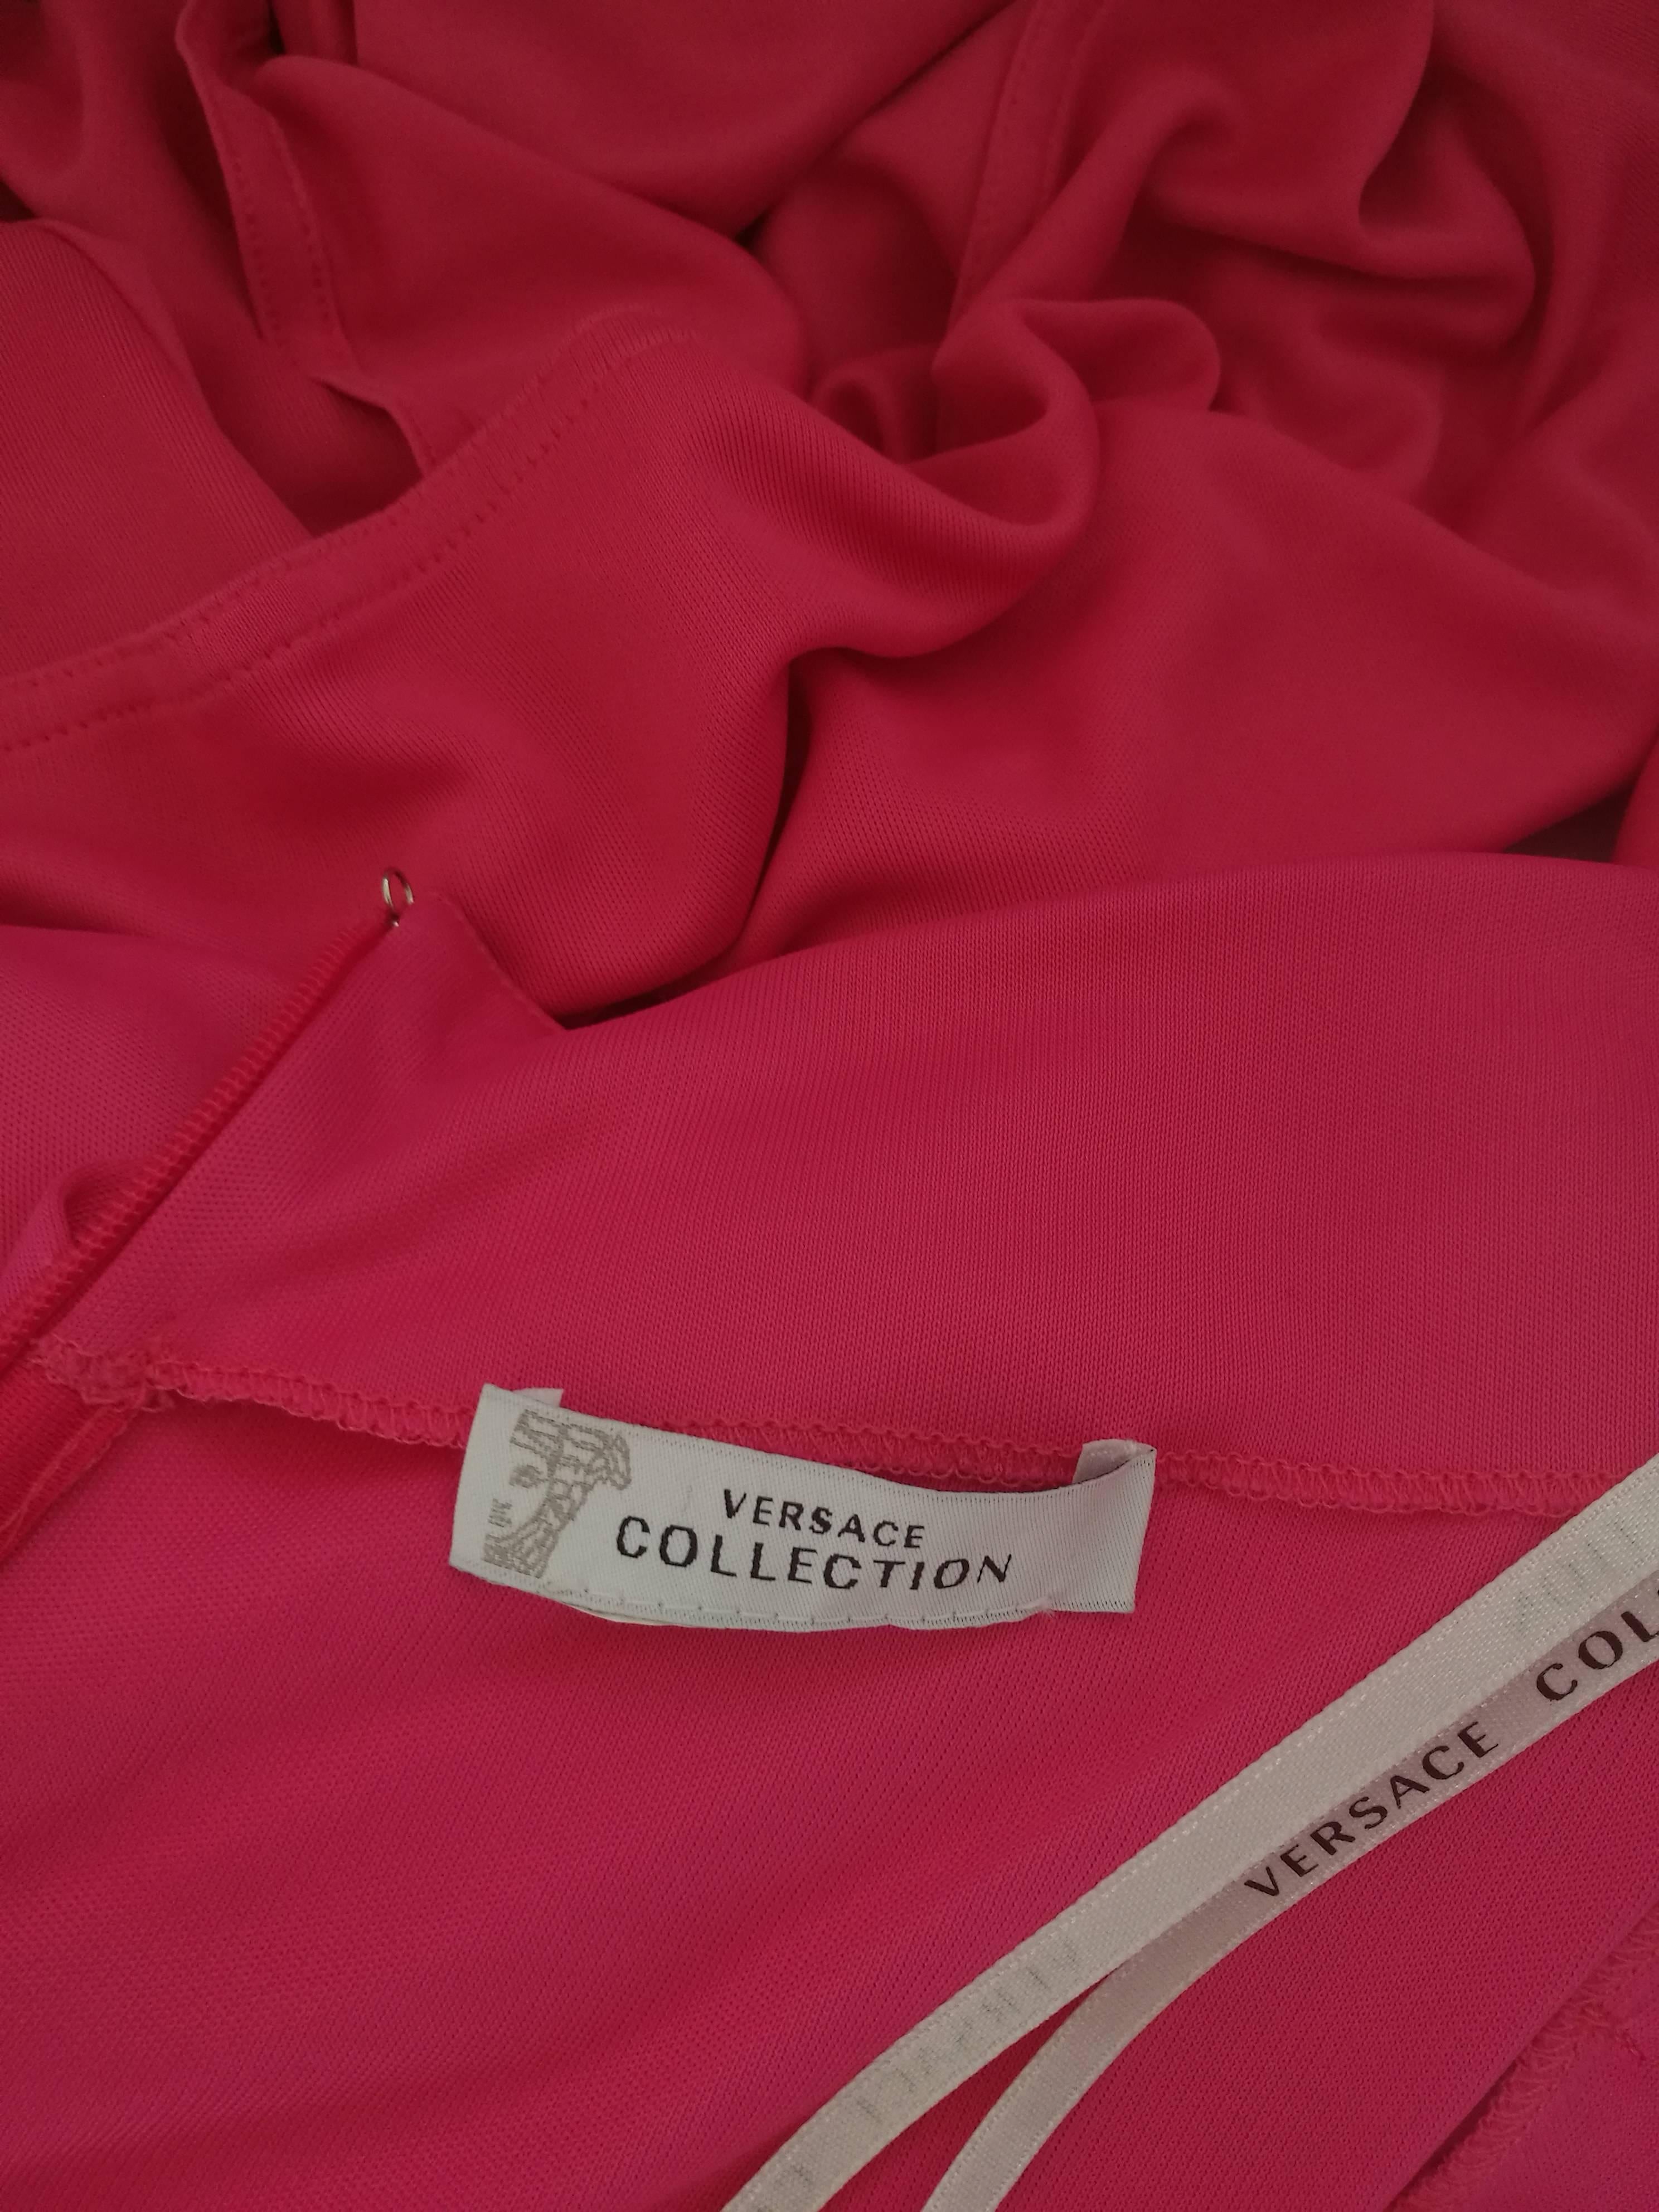 Women's Versace Collection Pink Dress